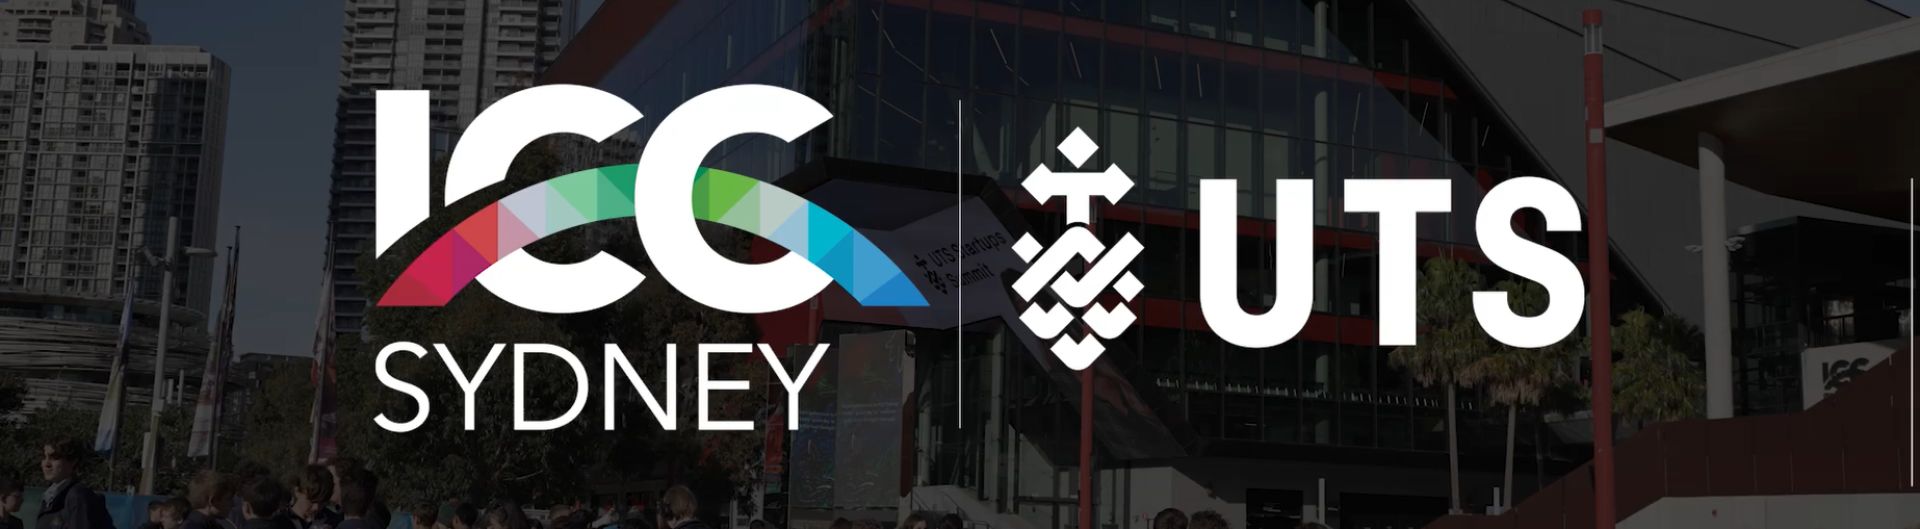 ICC Sydney x The University of Technolgy Sydney partnered to deliver UTS Startups Summit